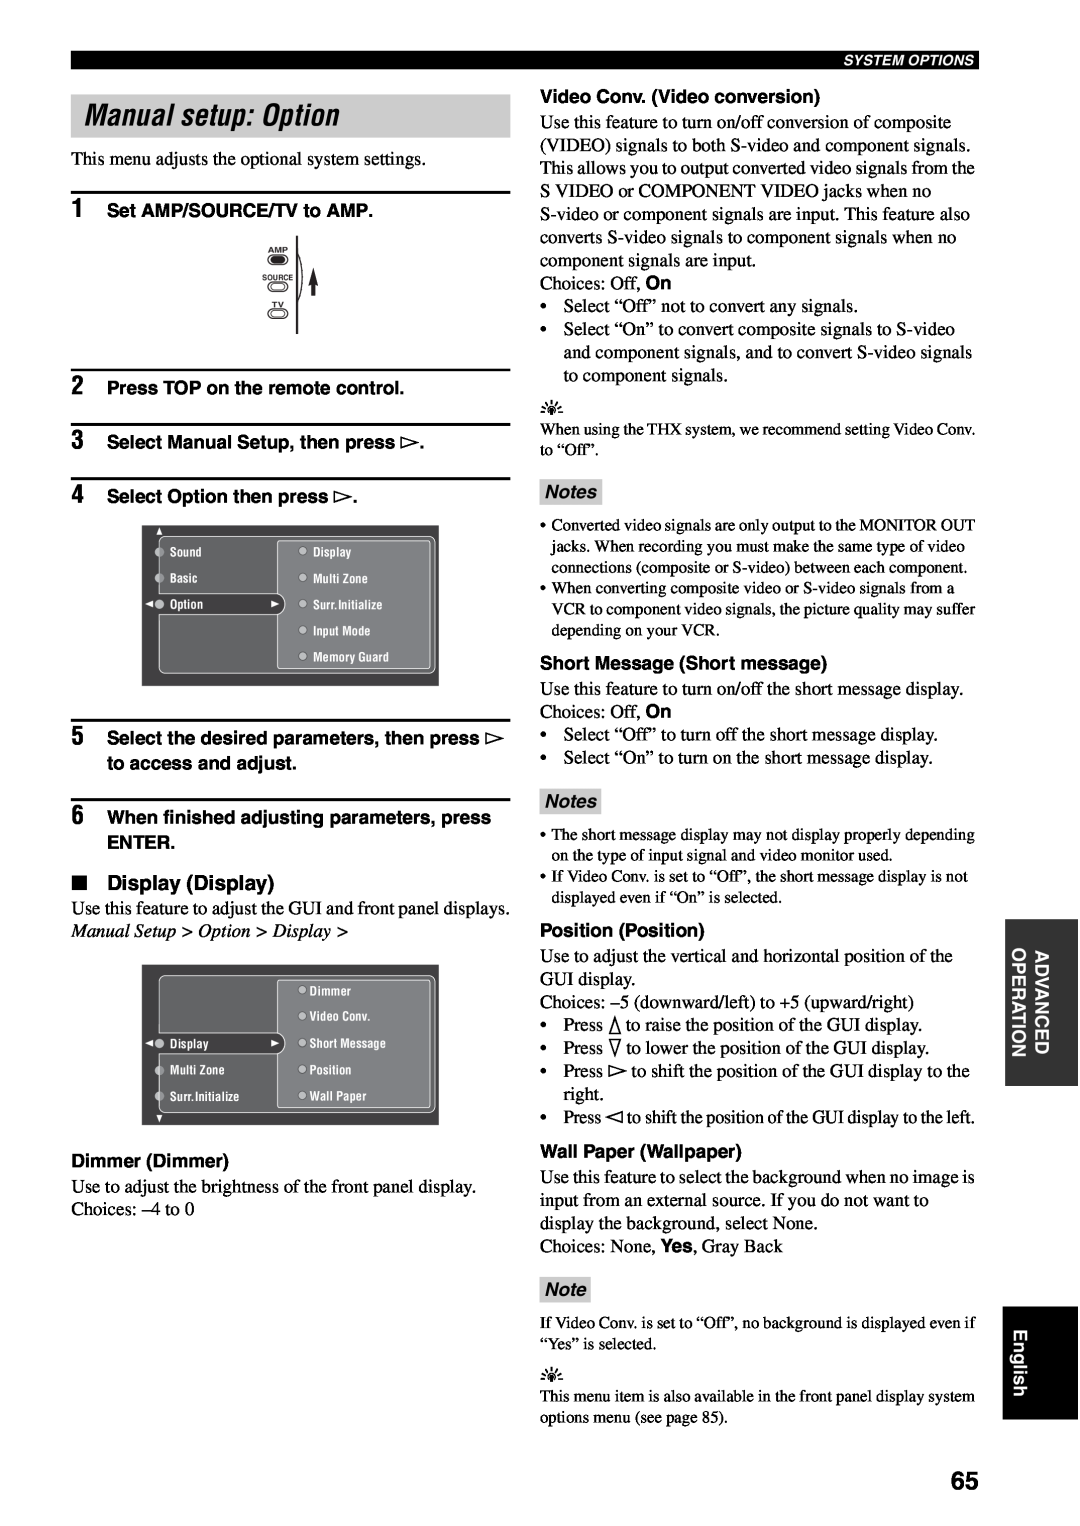 Yamaha RX-V2500 Manual setup: Option, Display Display, 4Select Option then press h, Manual Setup Option Display, Notes 